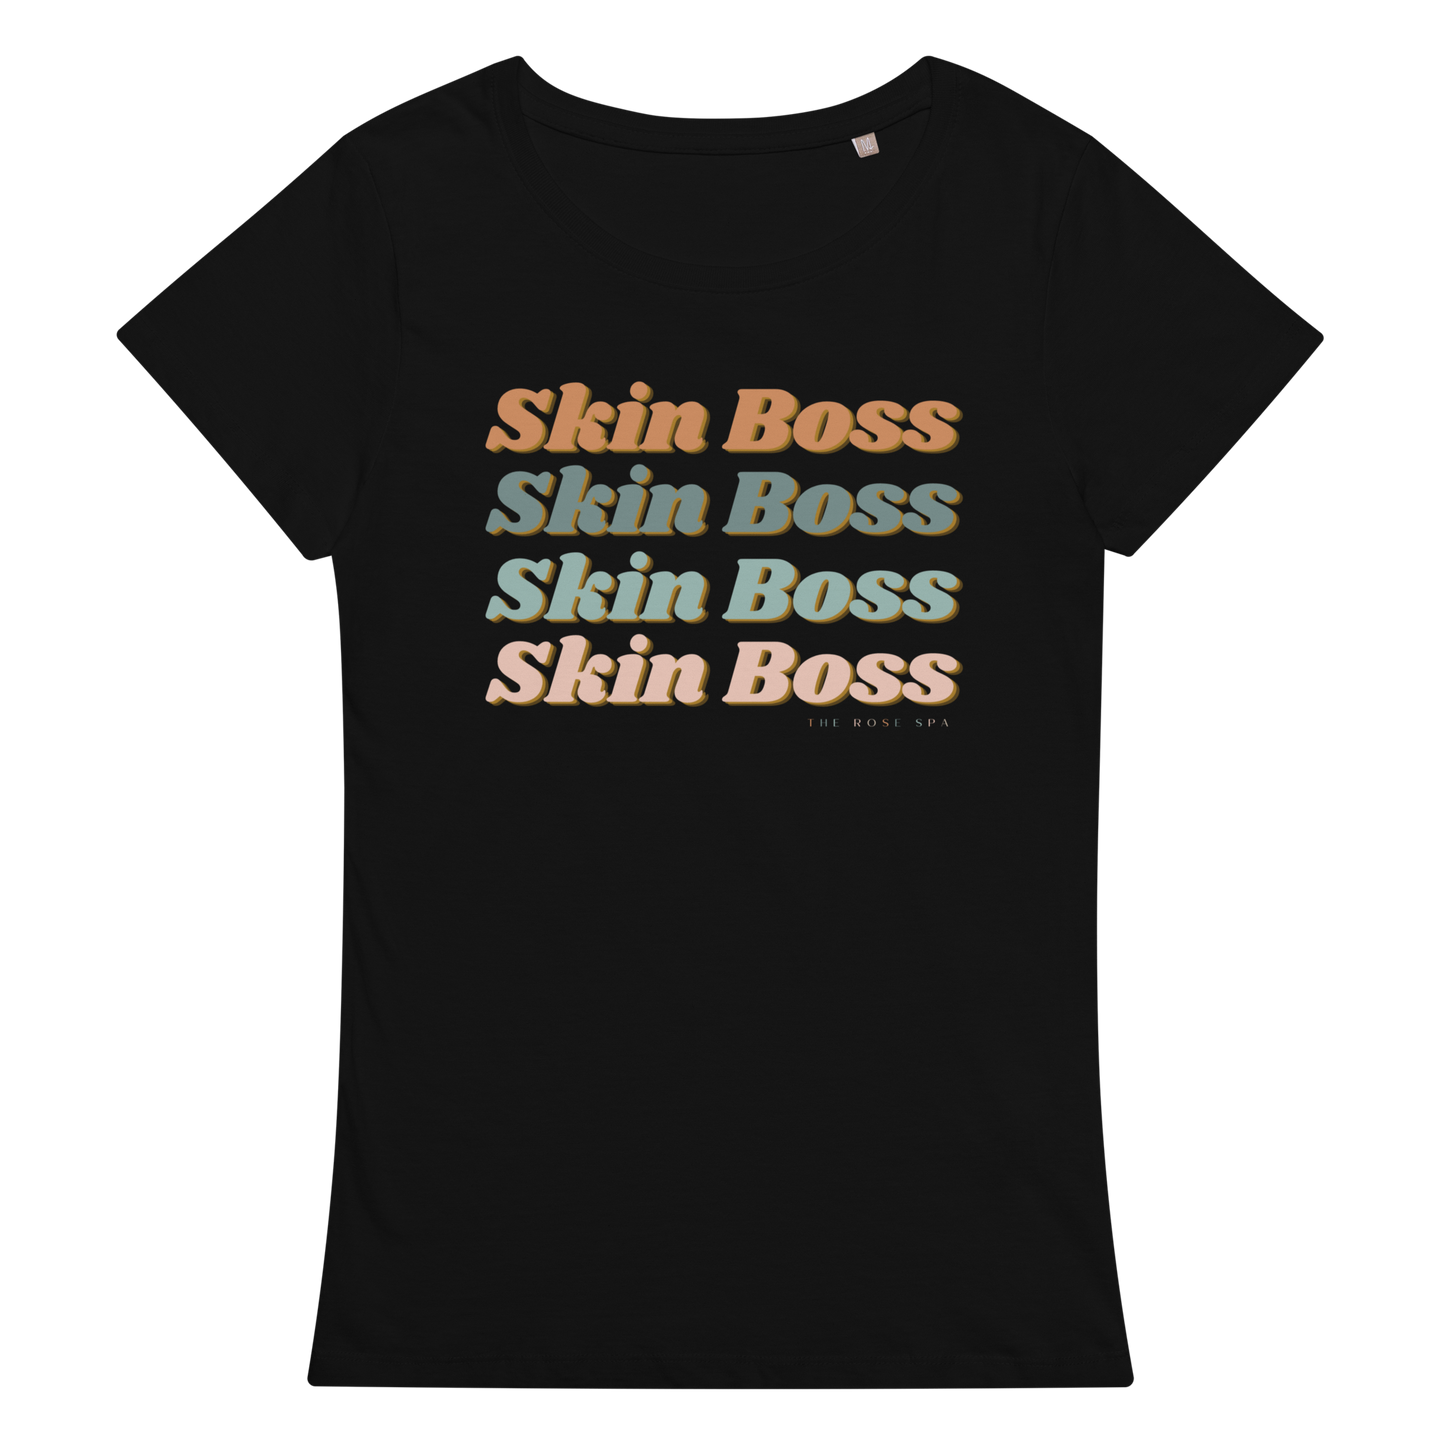 Skin Boss Organic T-Shirt